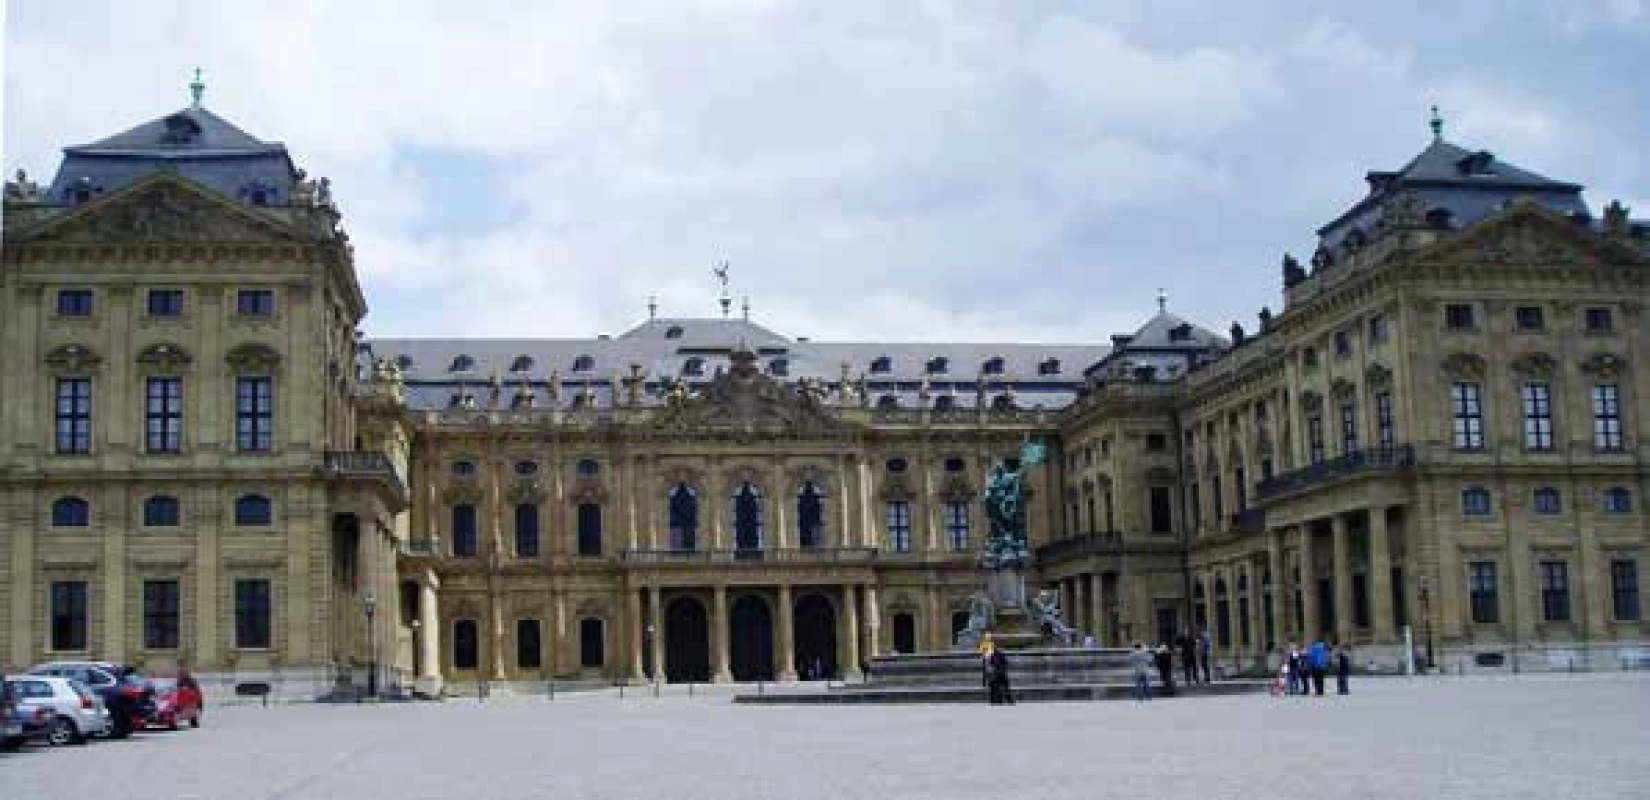 Rezidenčný palác vo Würzburgu